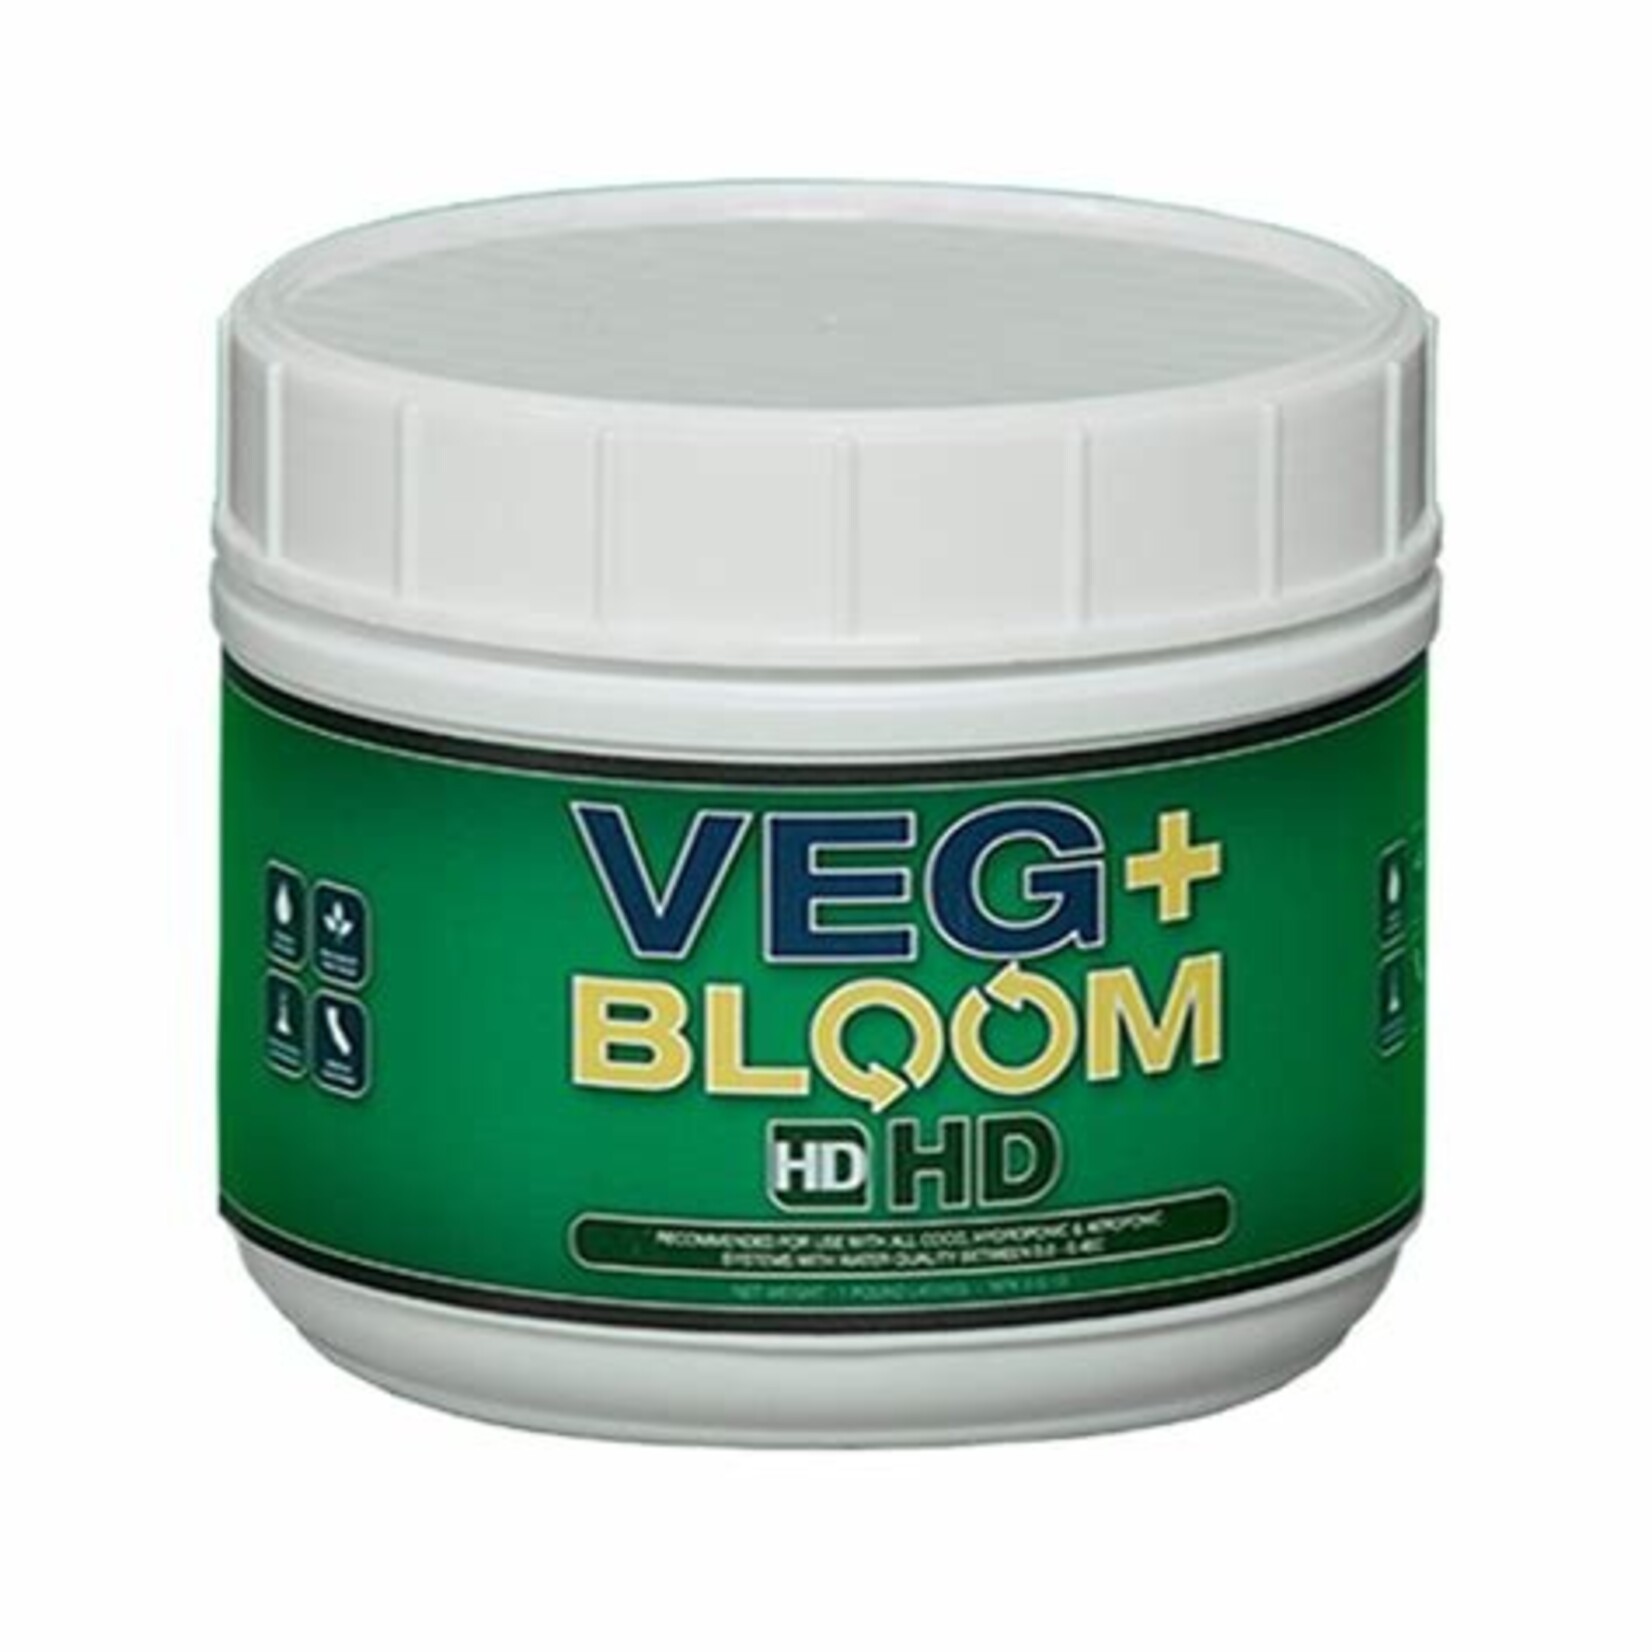 Veg+Bloom VEG+BLOOM HD BASE, 1 lb